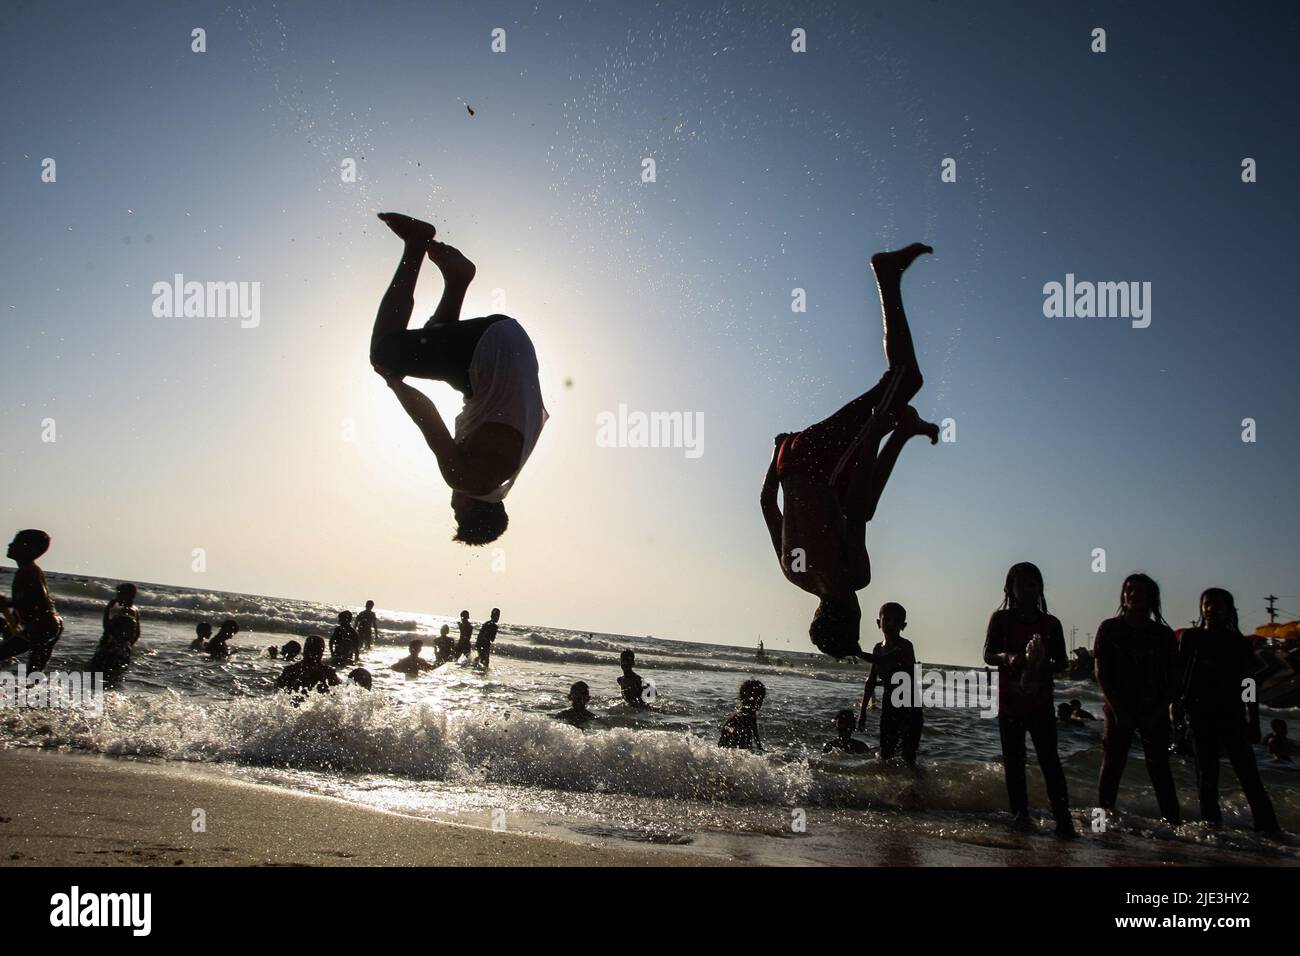 Gaza, Gaza. 24th June, 2022. Palestinians enjoy the beach in Gaza City on Friday, June 24, 2022. Photo by Ismael Mohamad/UPI Credit: UPI/Alamy Live News Stock Photo